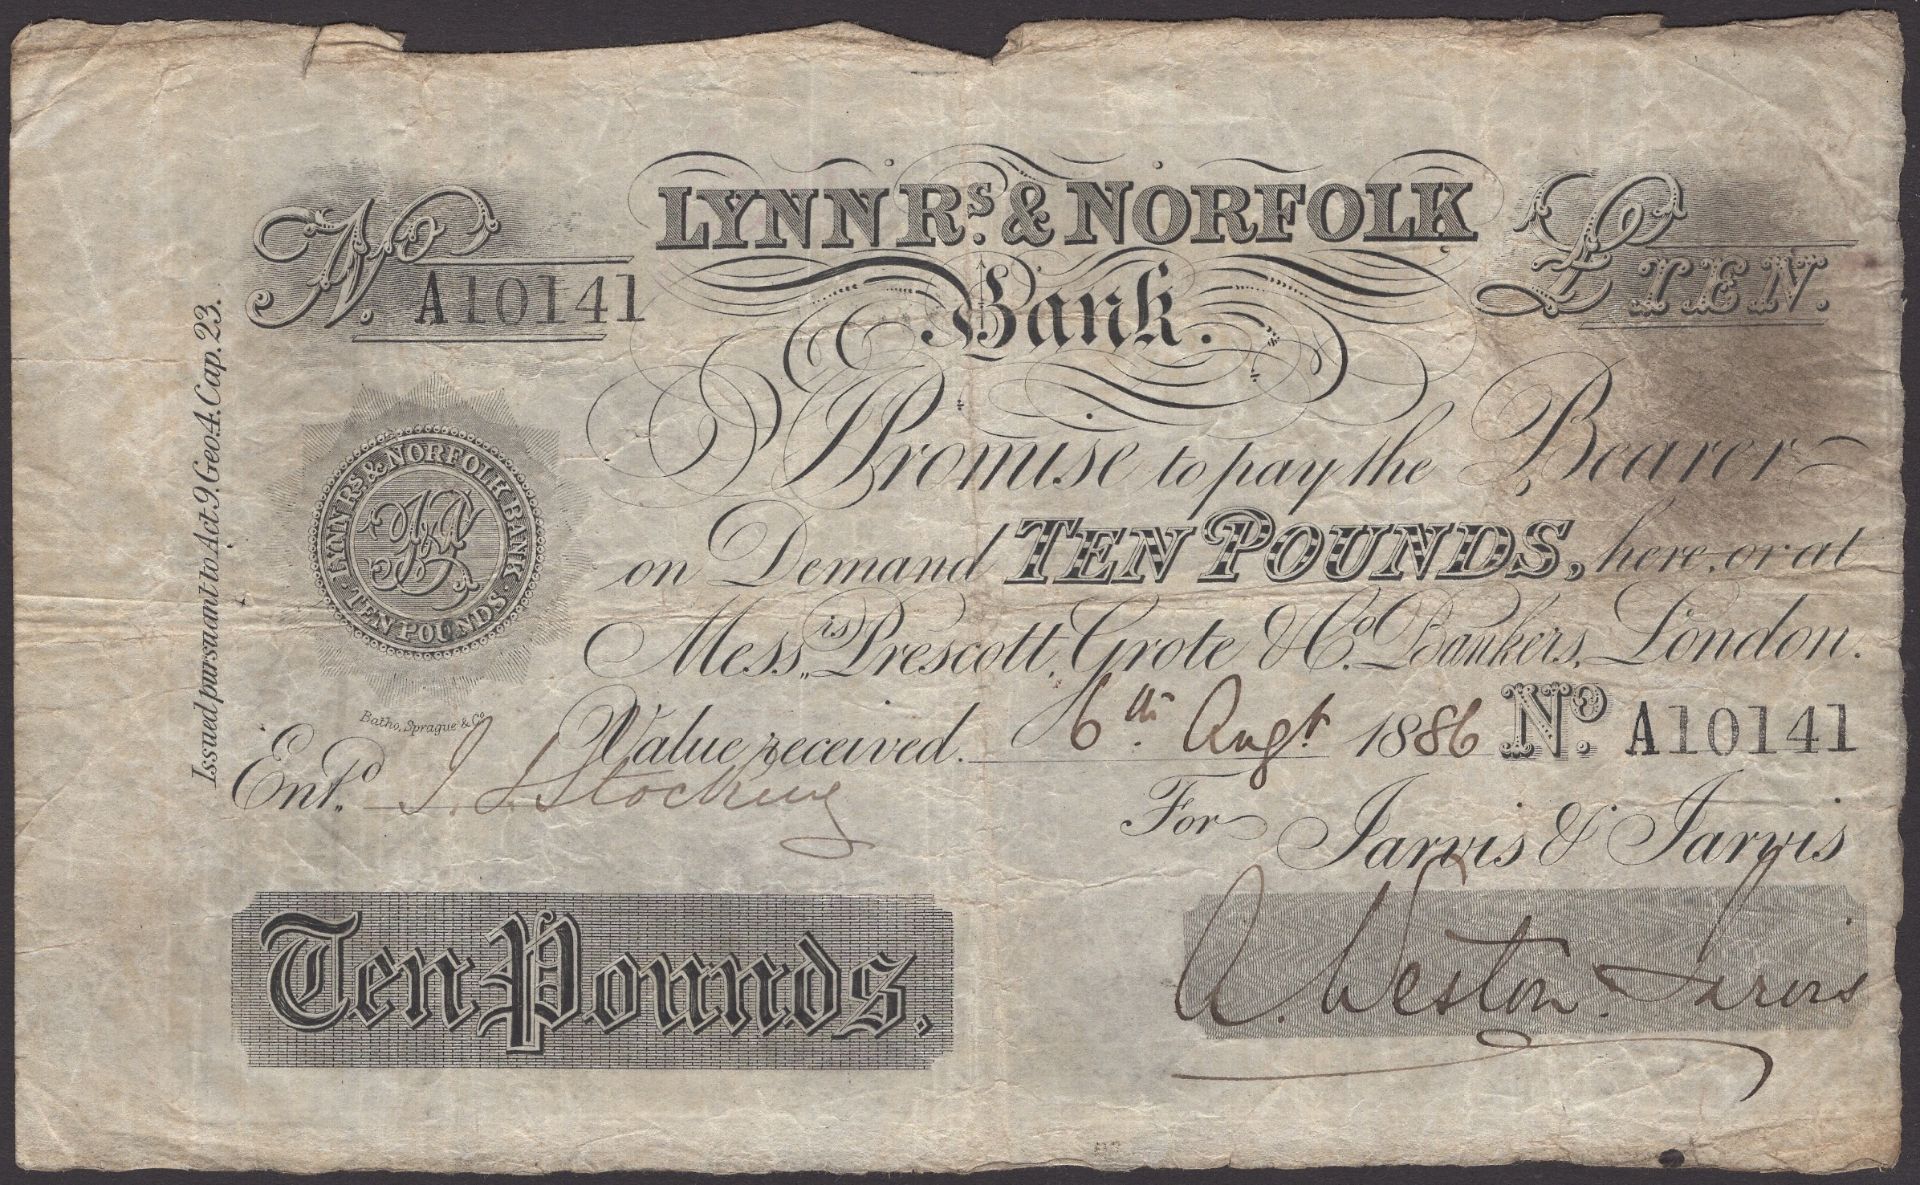 British and Irish Banknotes - Image 6 of 8